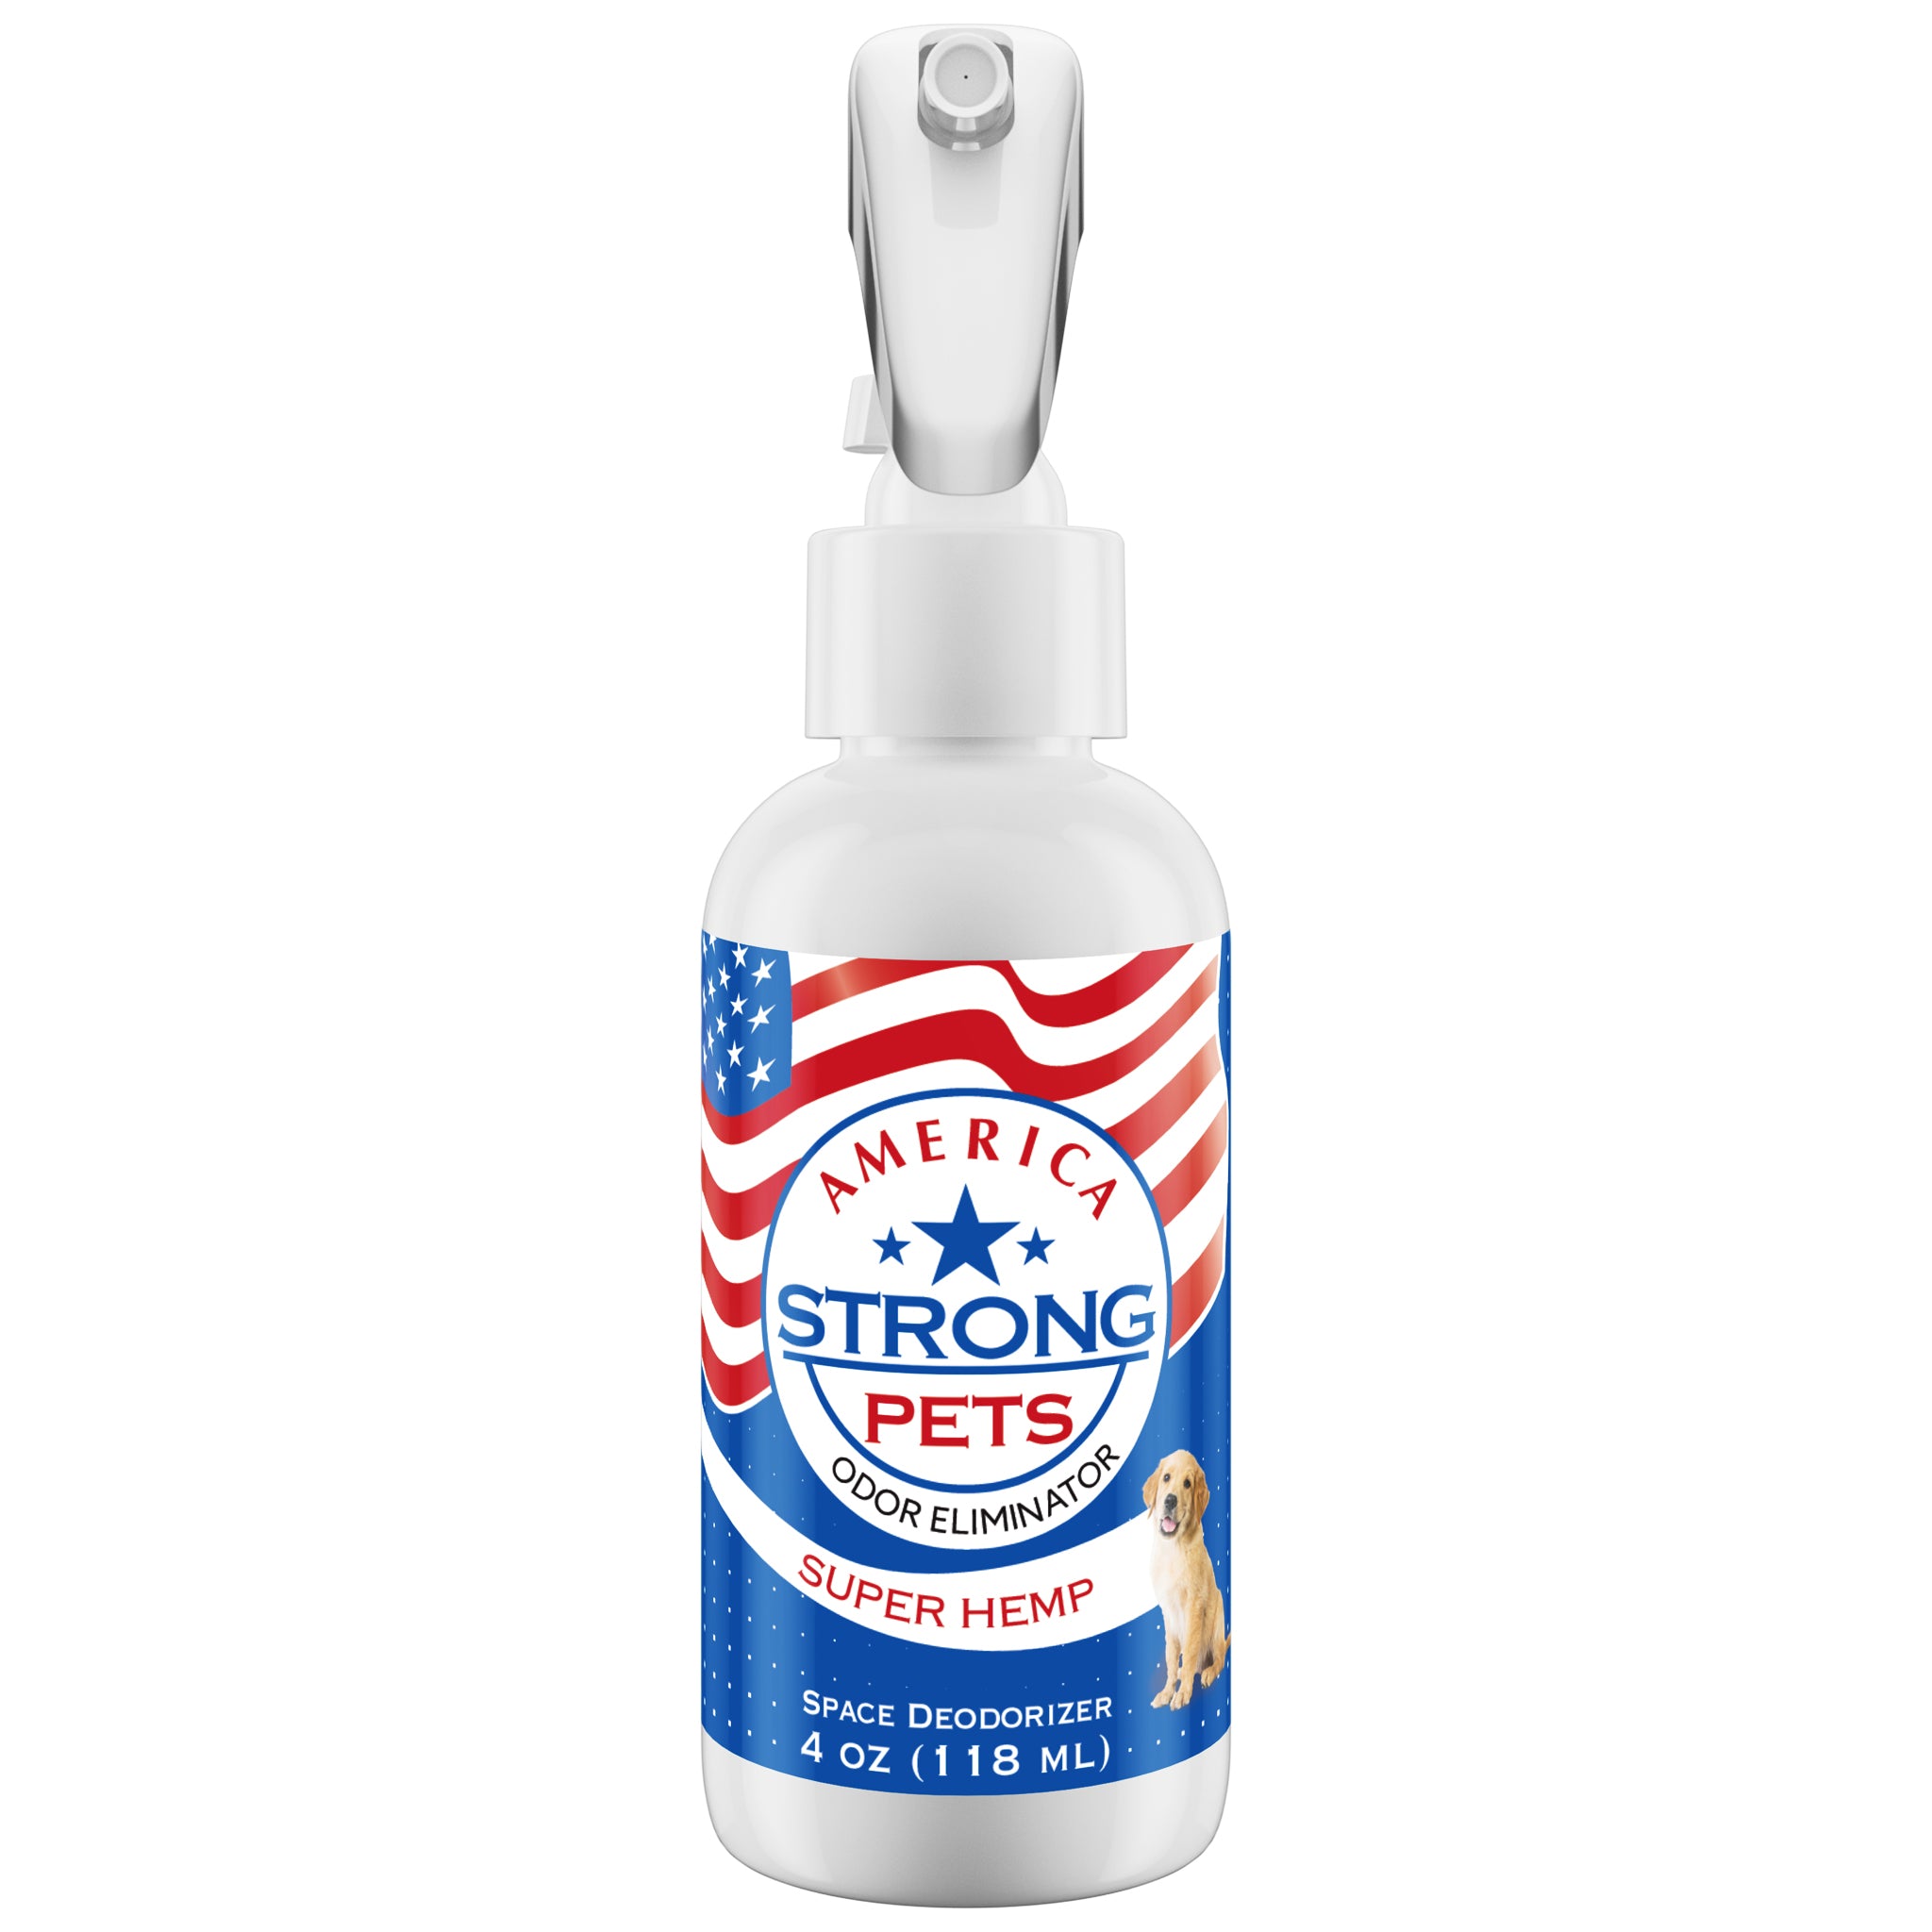 America Strong Pet Odor Eliminator - Super Hemp Scent Size: 4 fl oz